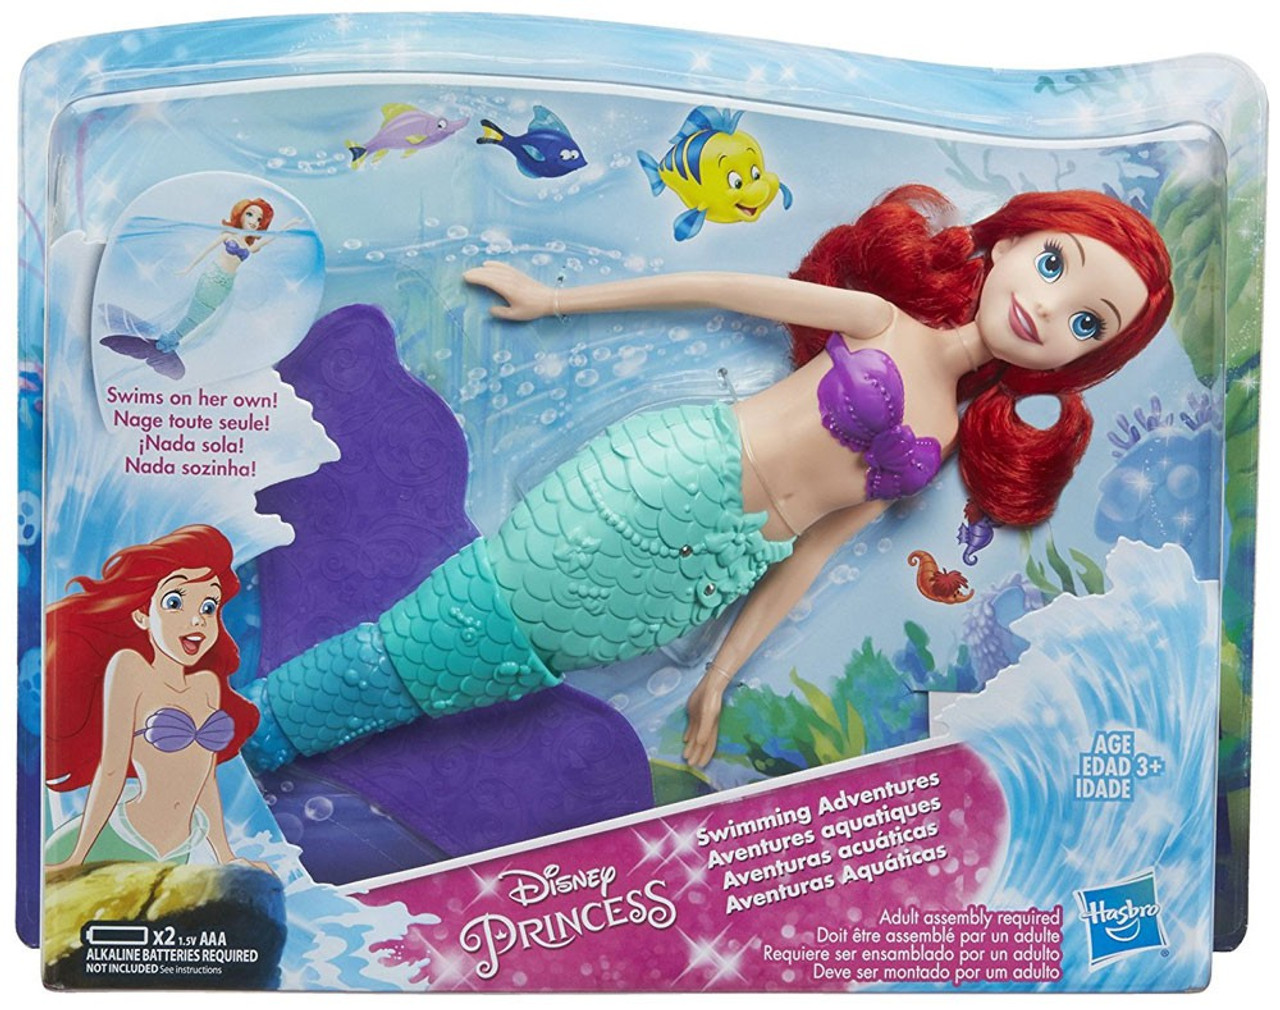 Disney Princess The Little Mermaid Swimming Adventures